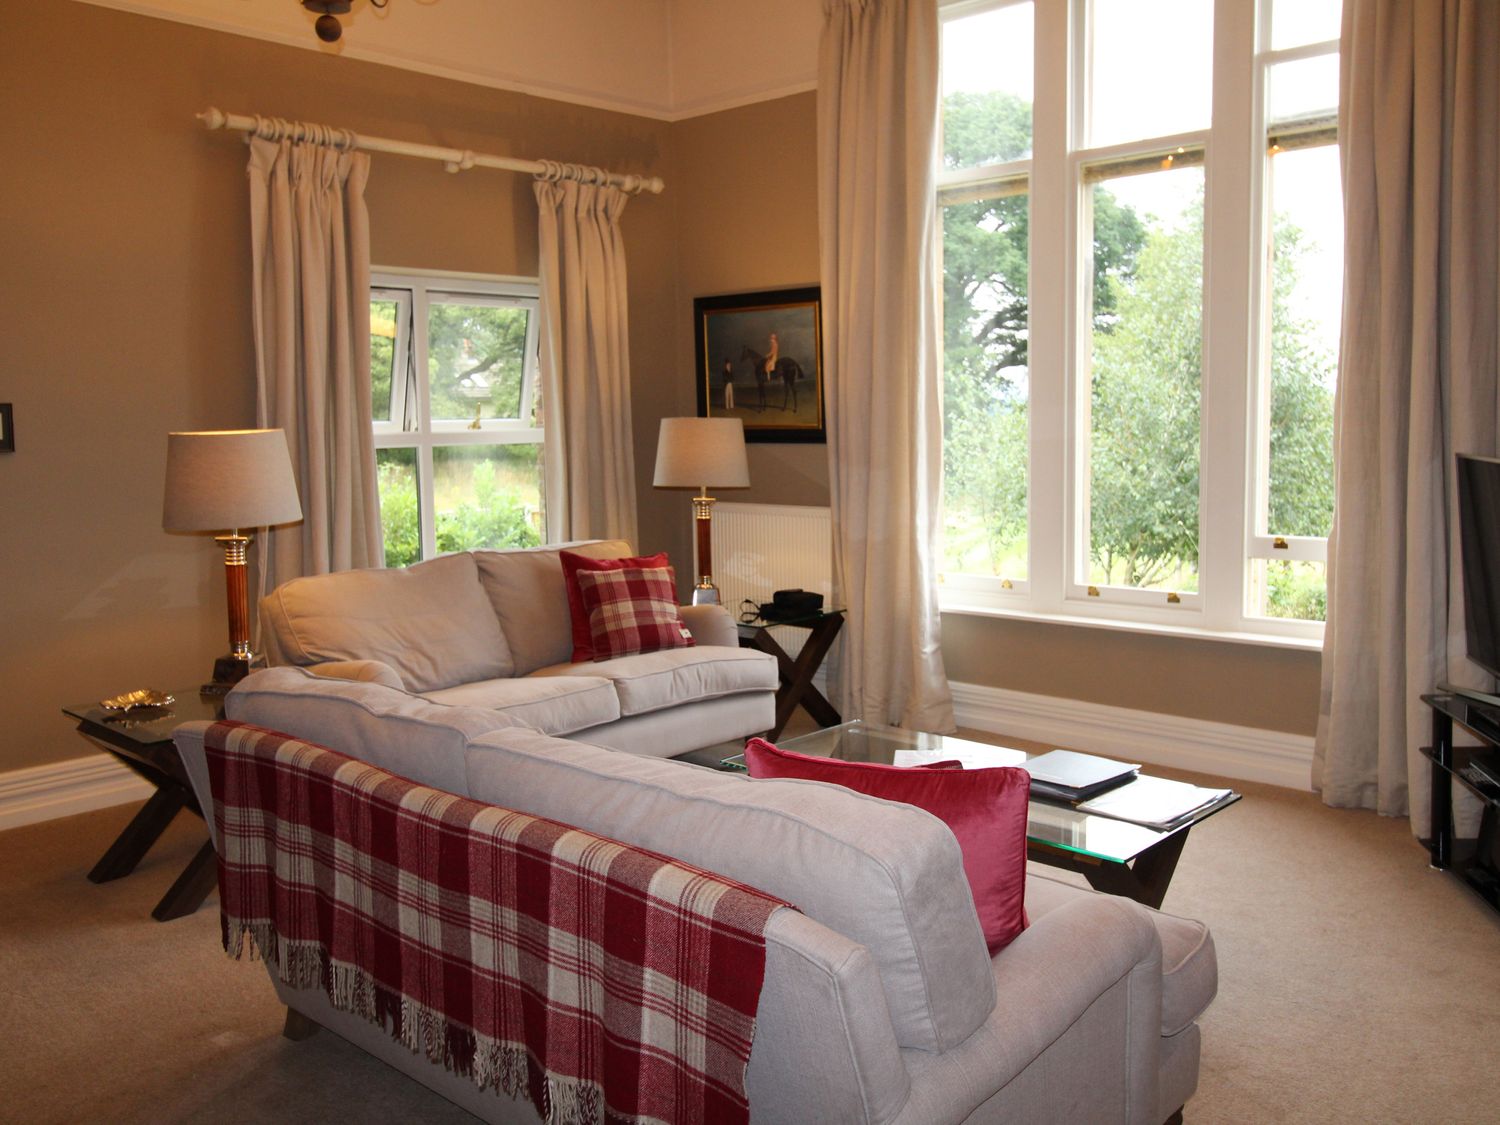 Geltsdale Garden Apartment - Lake District - 968998 - photo 1